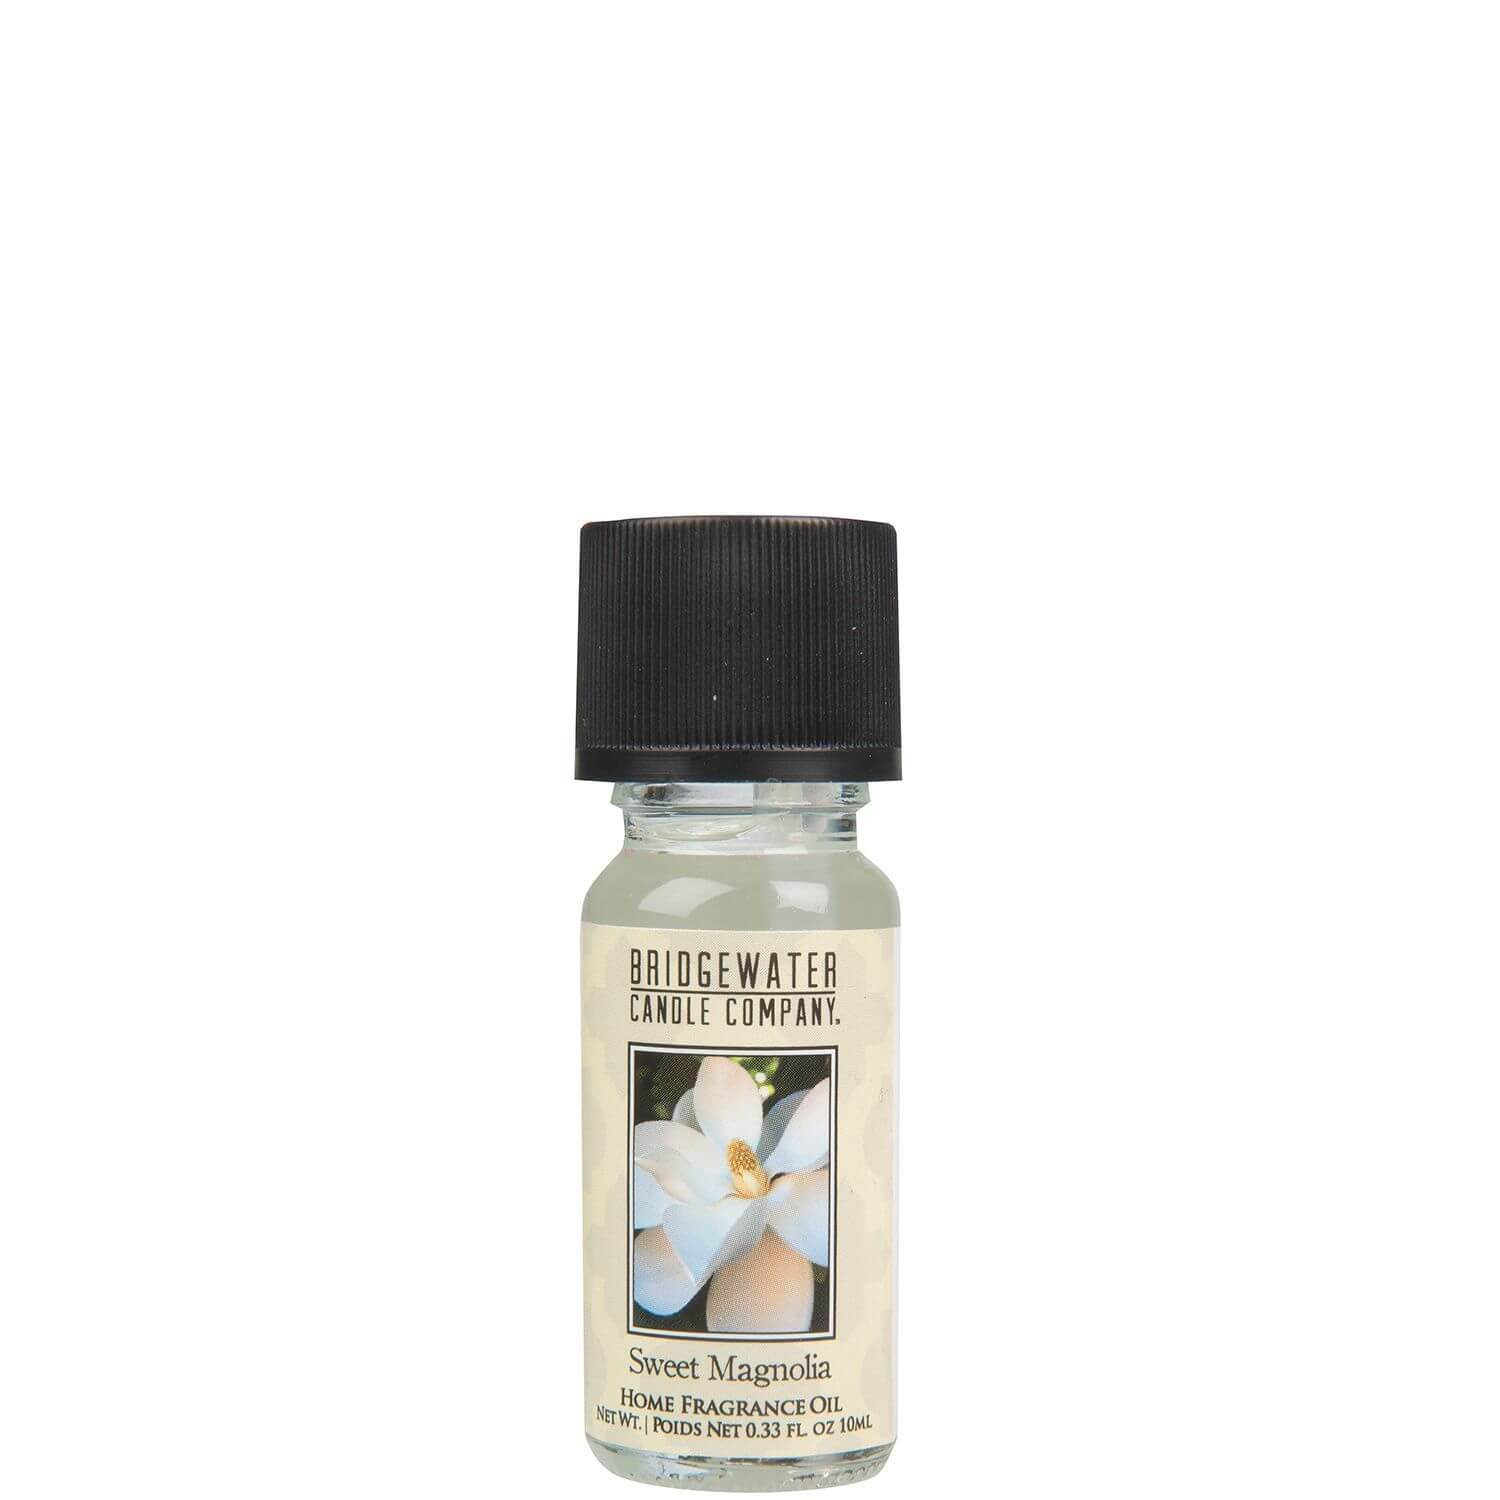 Sweet Magnolia Home Fragrance Oil - Bridgewater